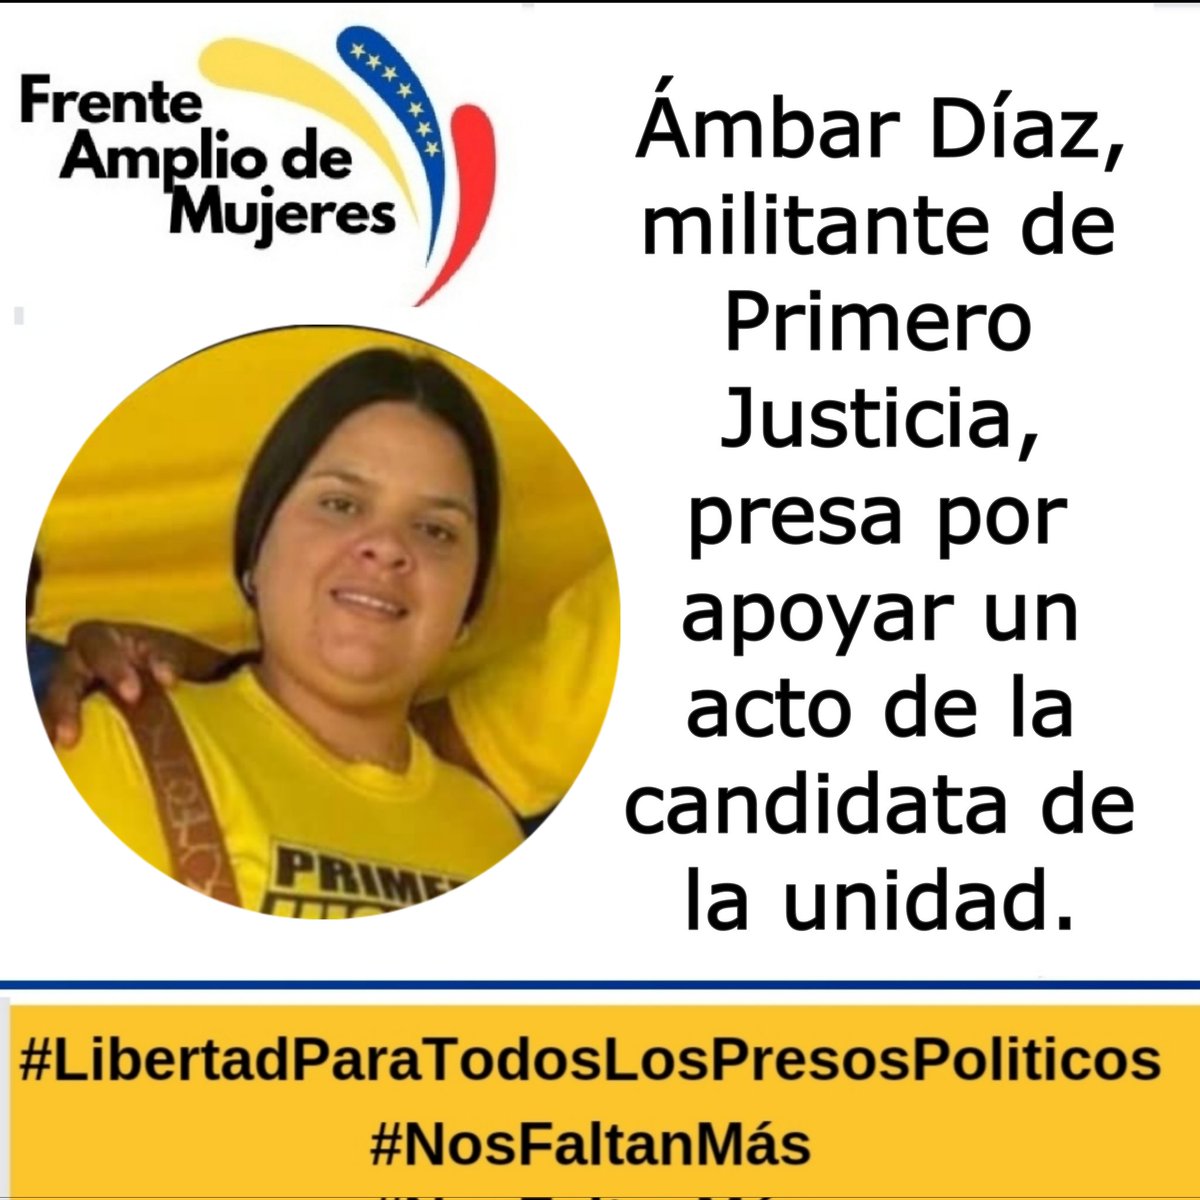 #LibertadParaLosPresosPoliticos
#SonInocentes